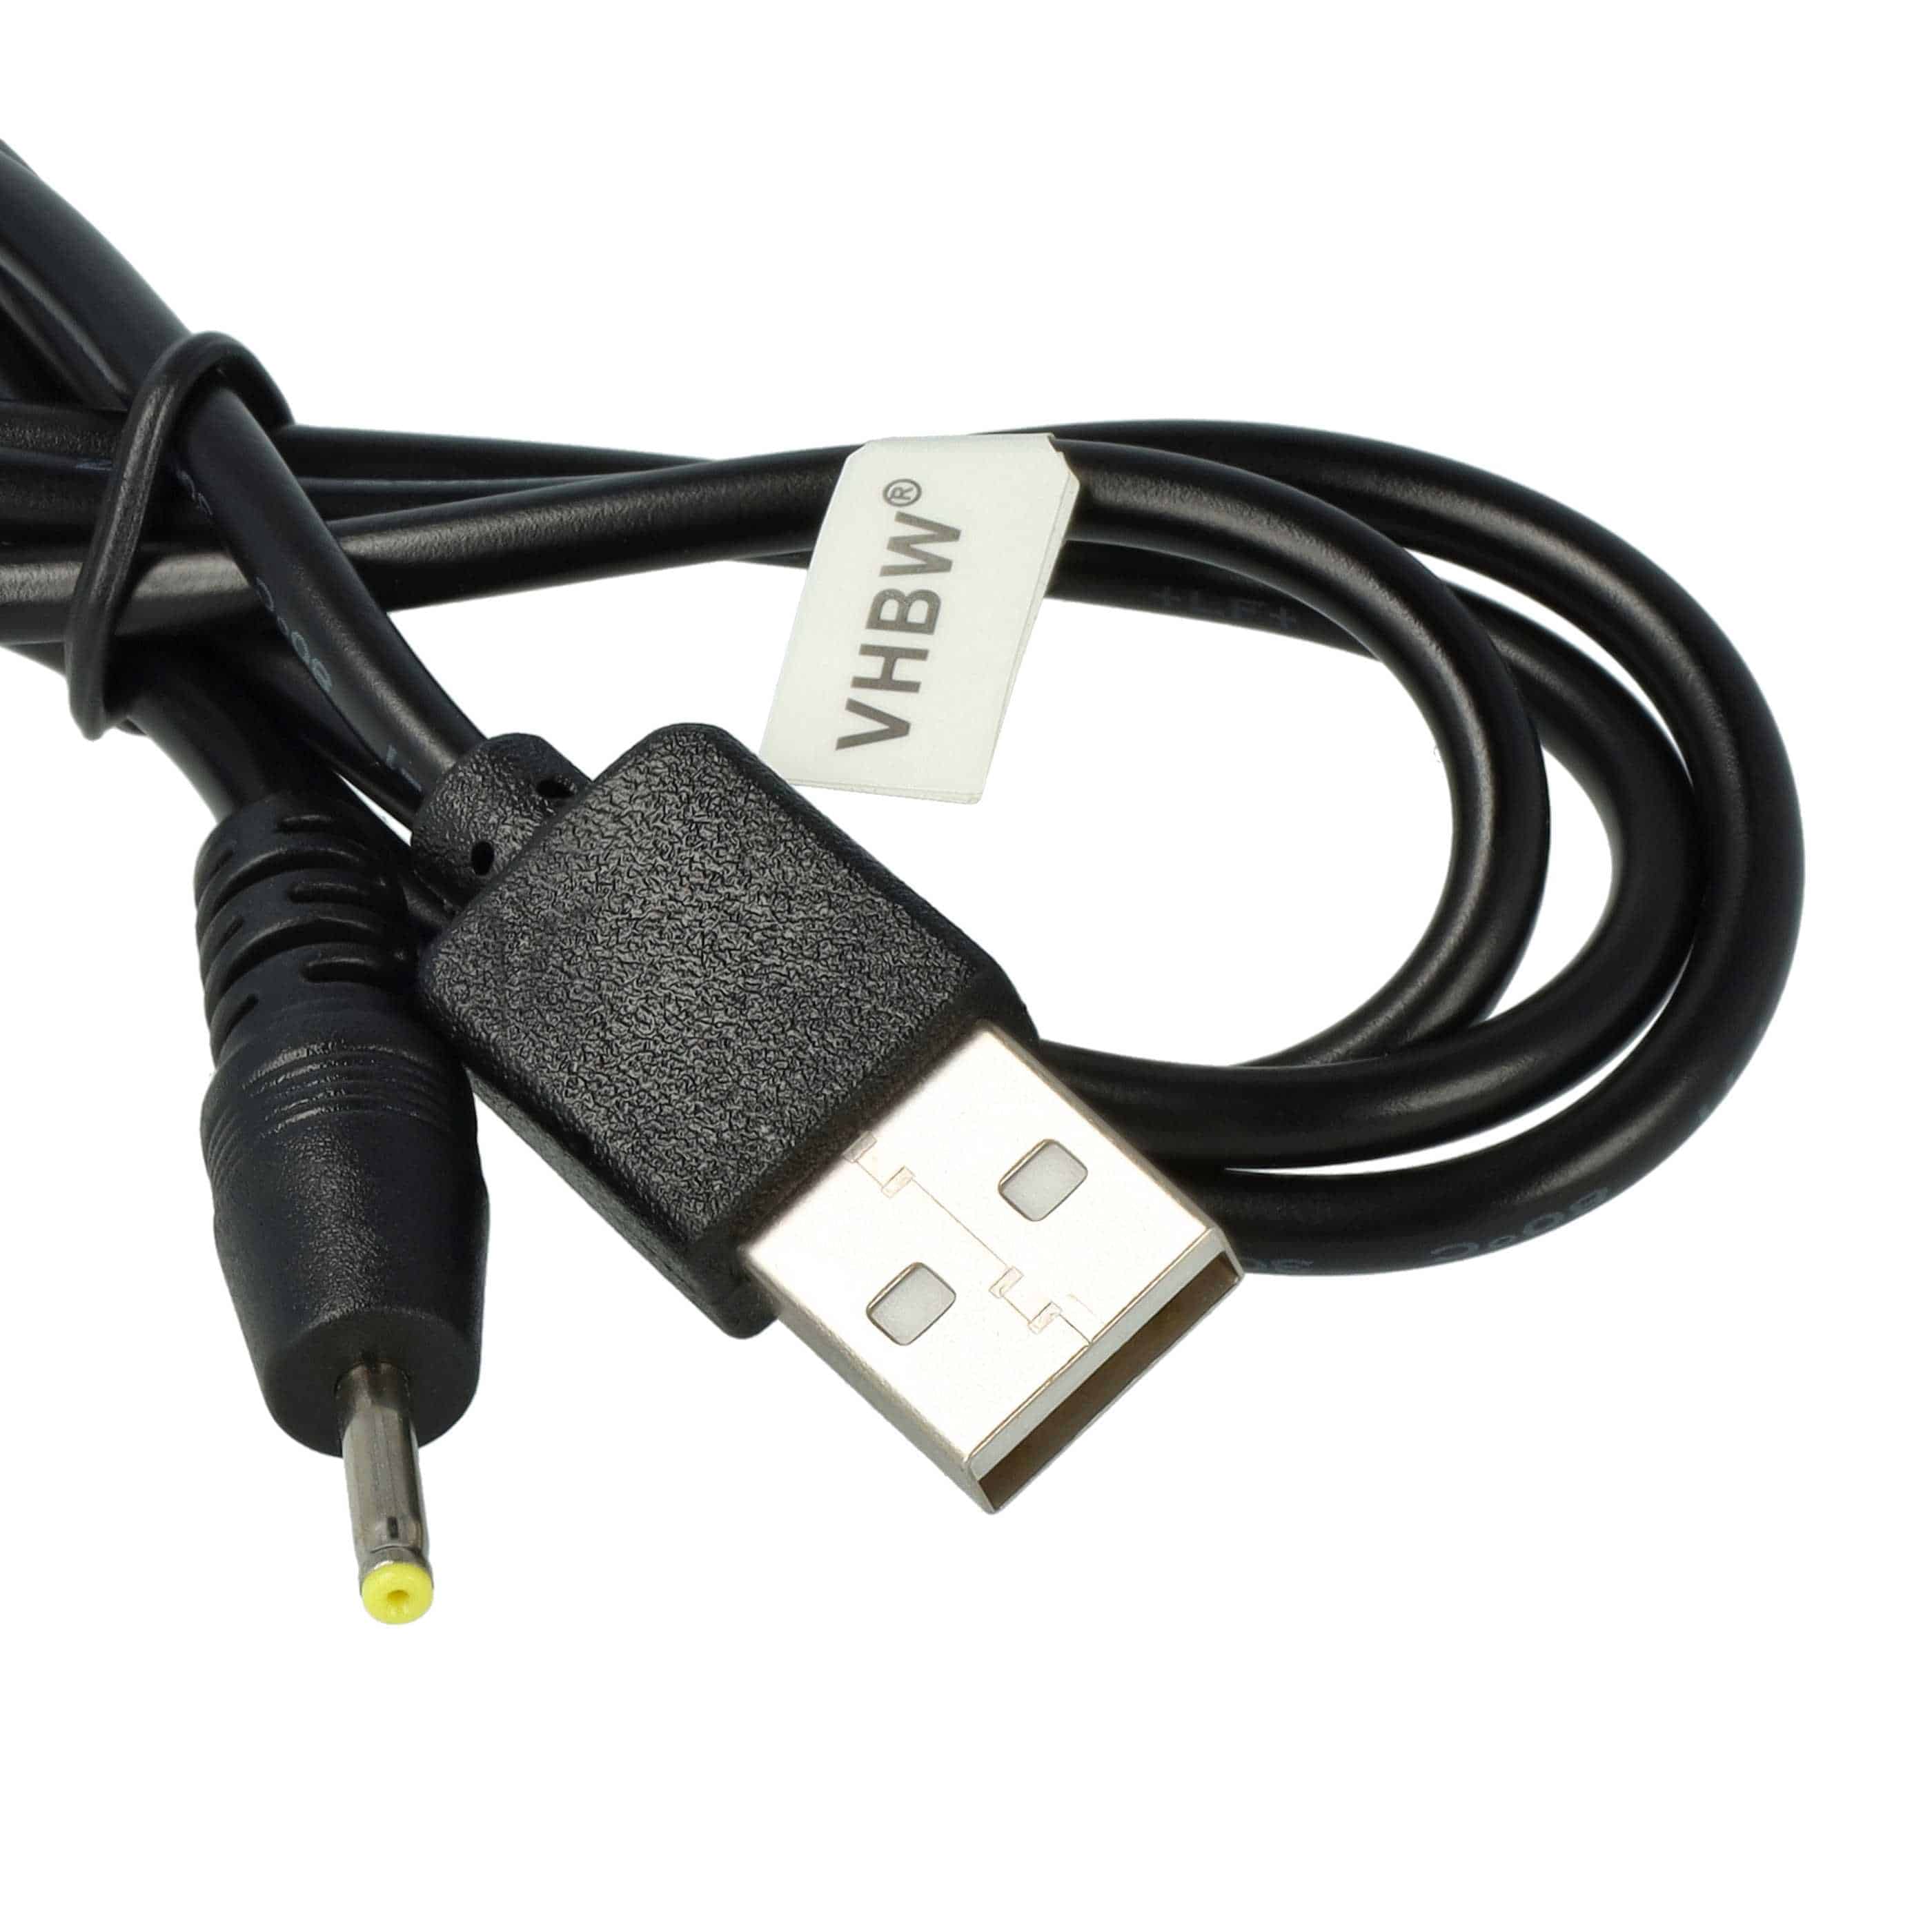 vhbw Cable de carga USB compatible con Starkid 2.4 GHz Niantic II 68007 dron, cuadricóptero - 50 cm